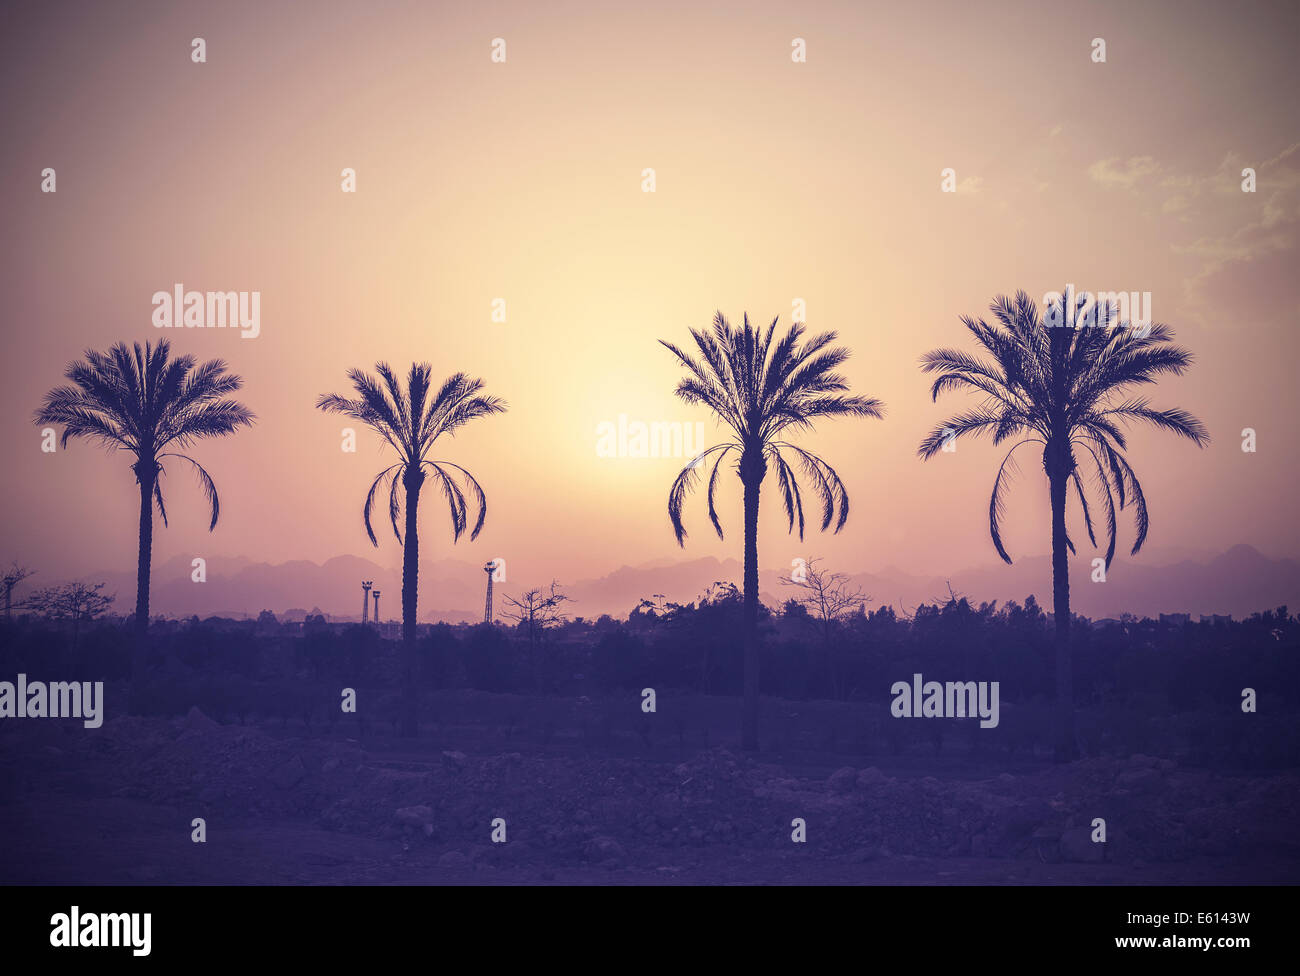 Vintage stilisierte Palmen Bäume Silhouetten bei Sonnenuntergang. Stockfoto